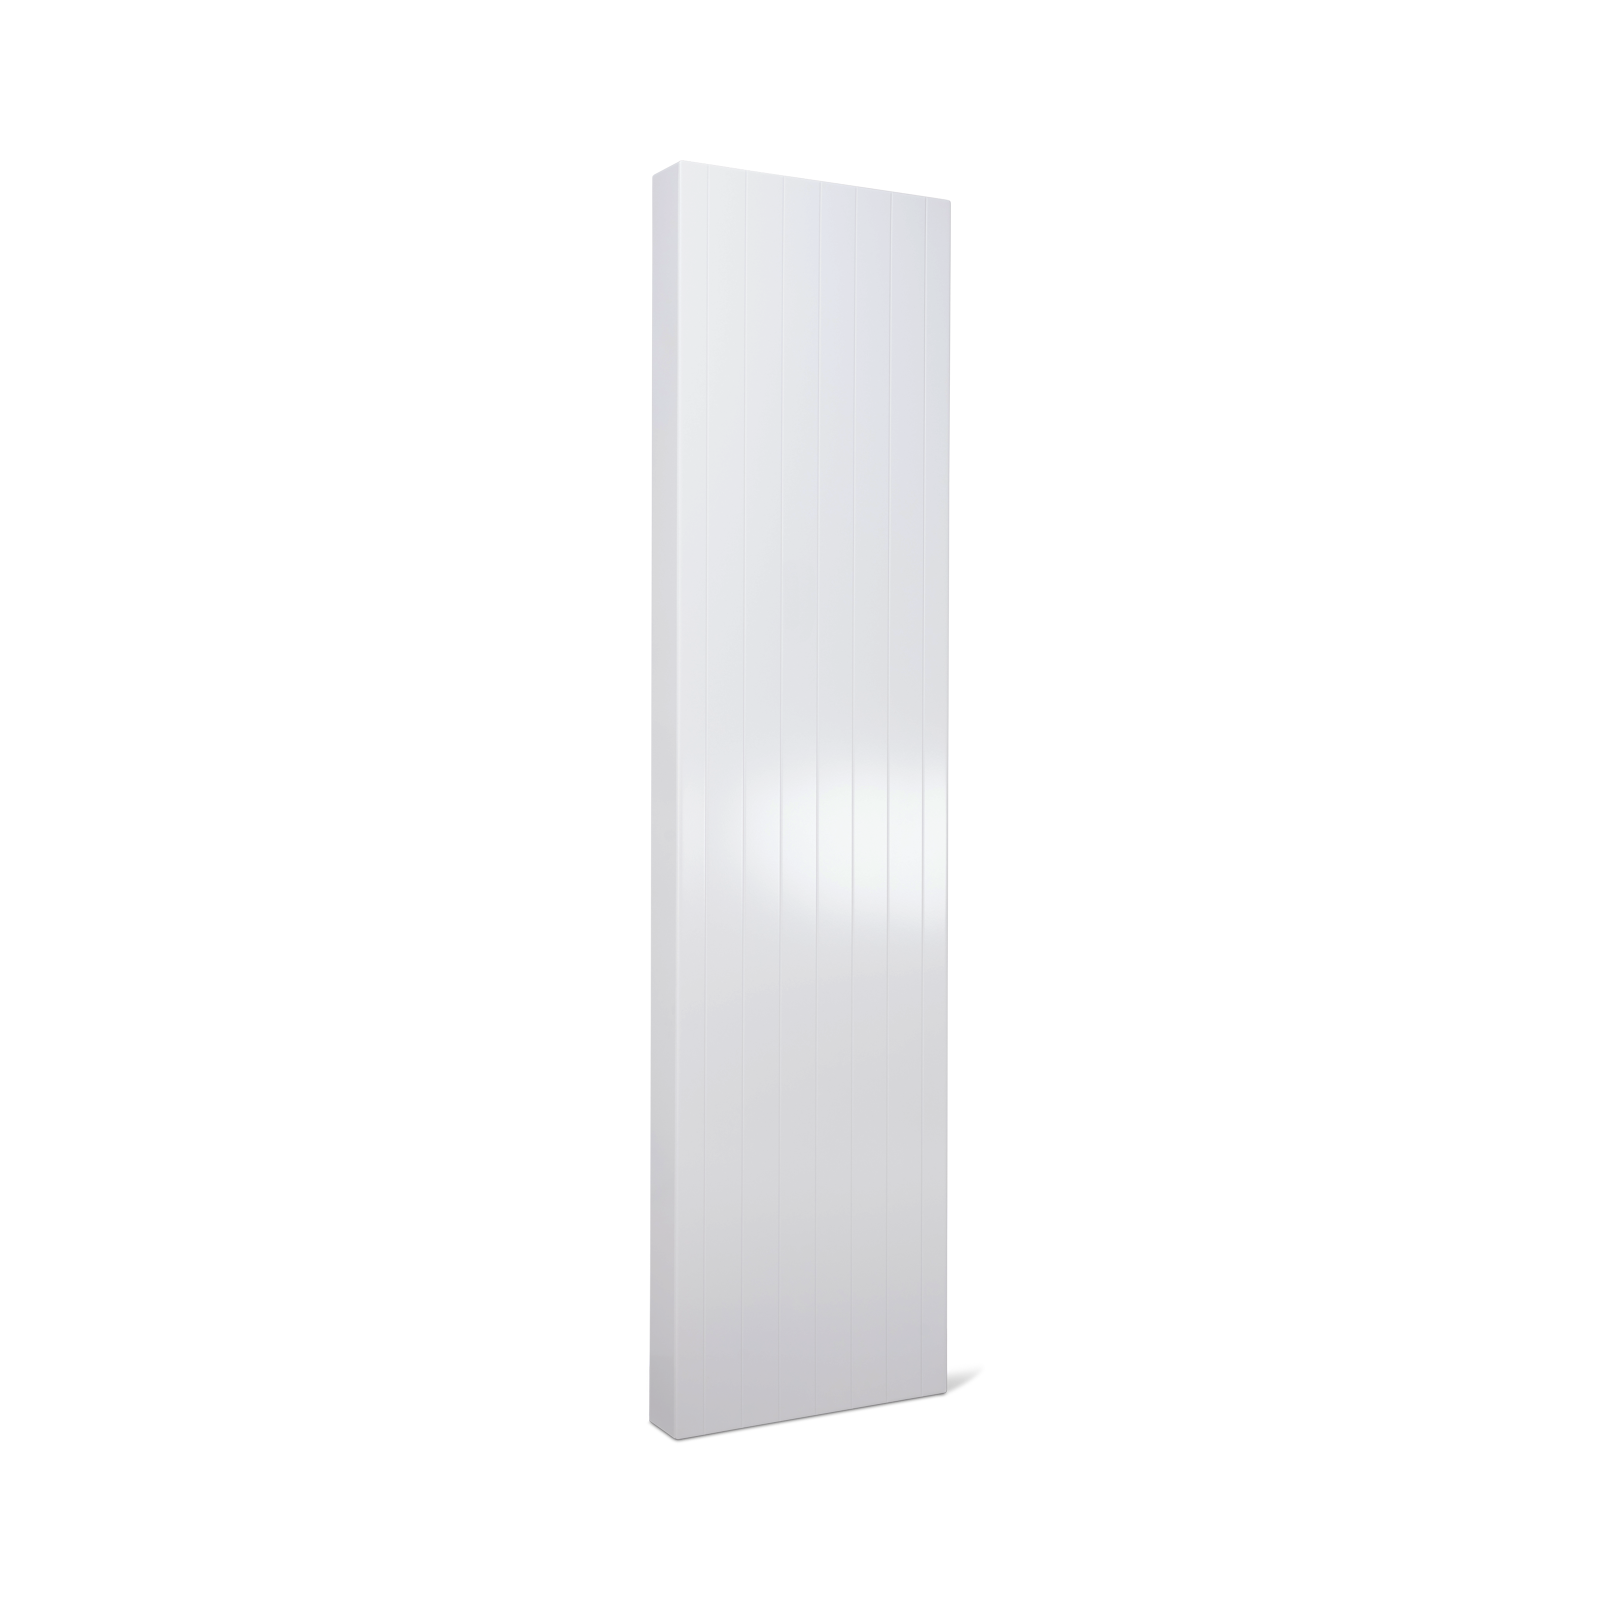 Thermrad Vertical Plateau Line radiator